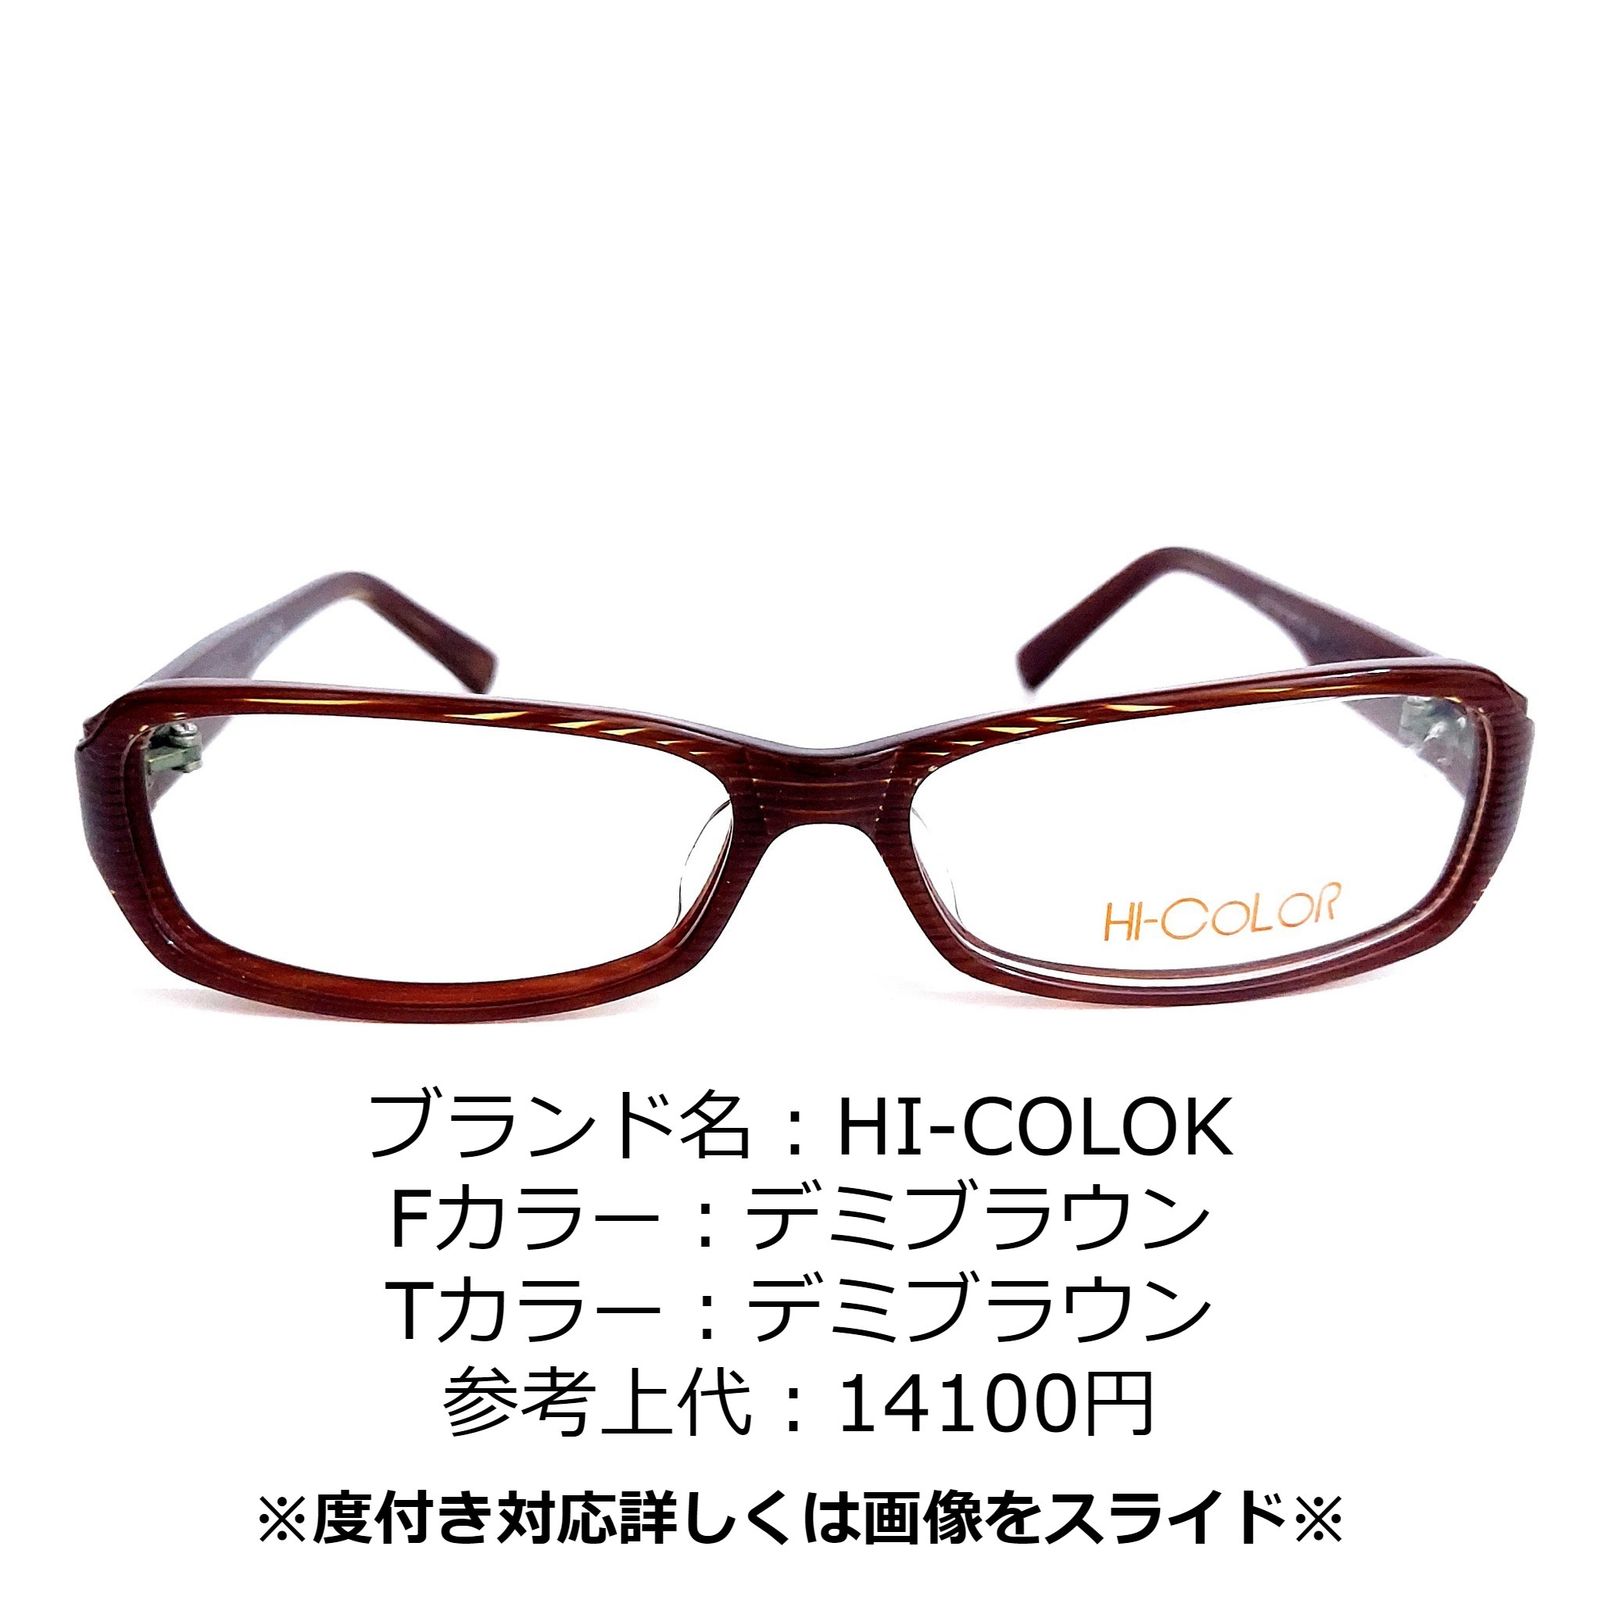 No.1257-メガネ HI-COLOK【フレームのみ価格】 www.krzysztofbialy.com